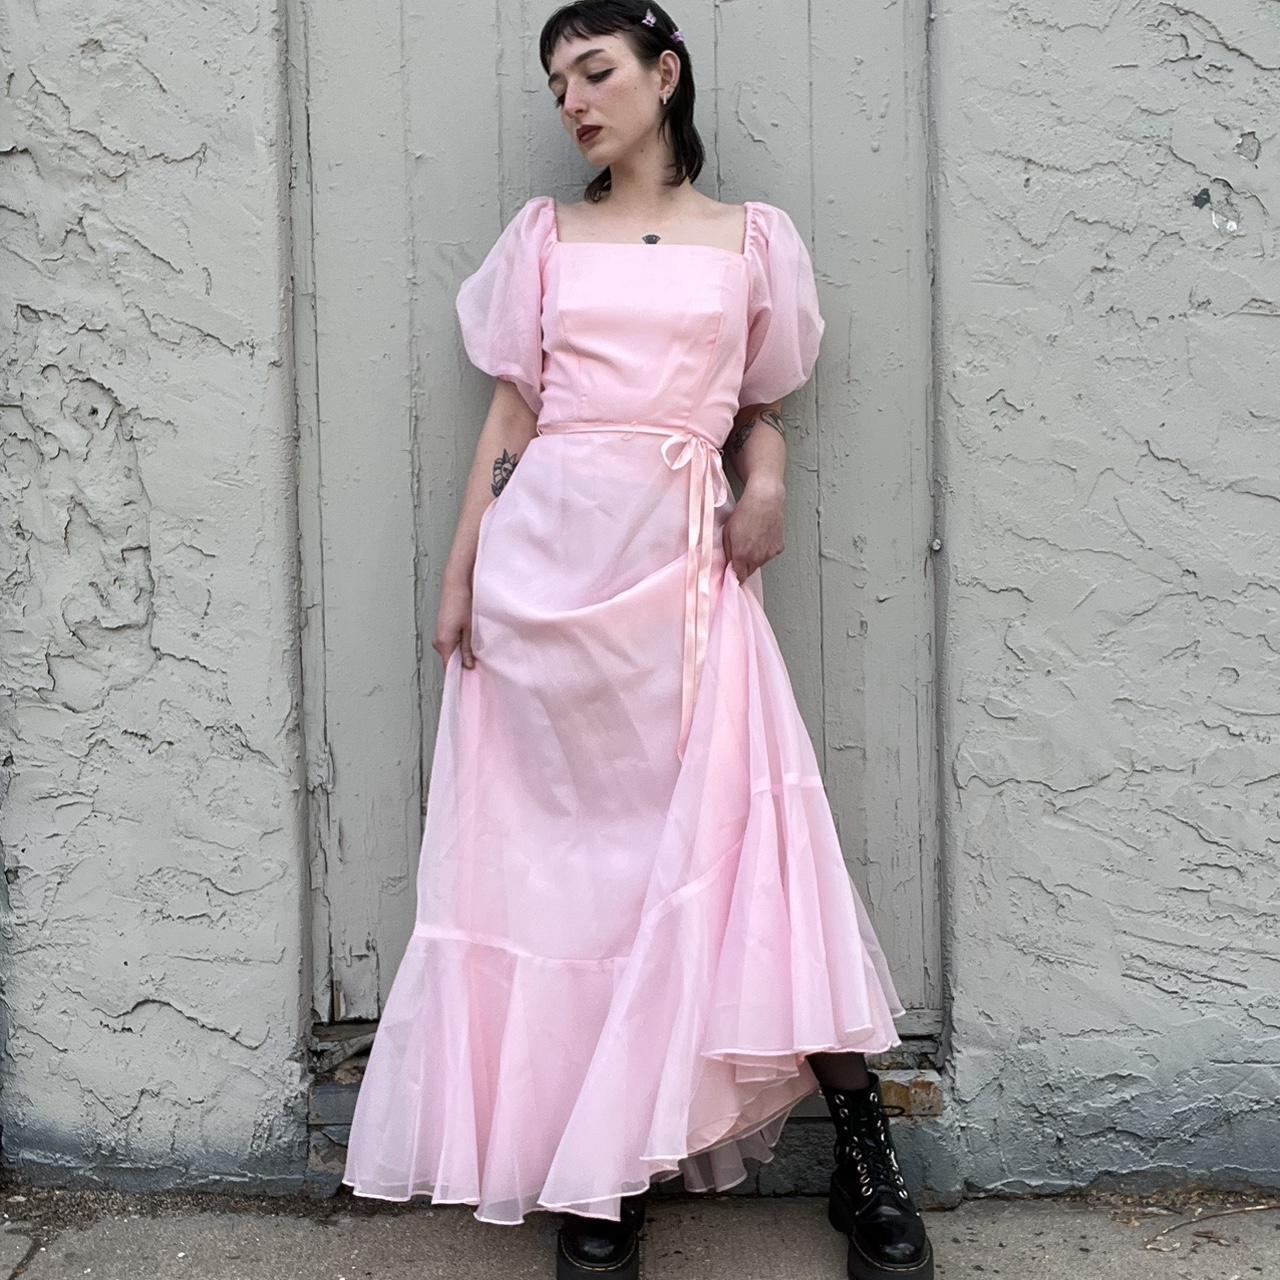 The prettiest pink princess dress 😍 vintage 1960s... - Depop